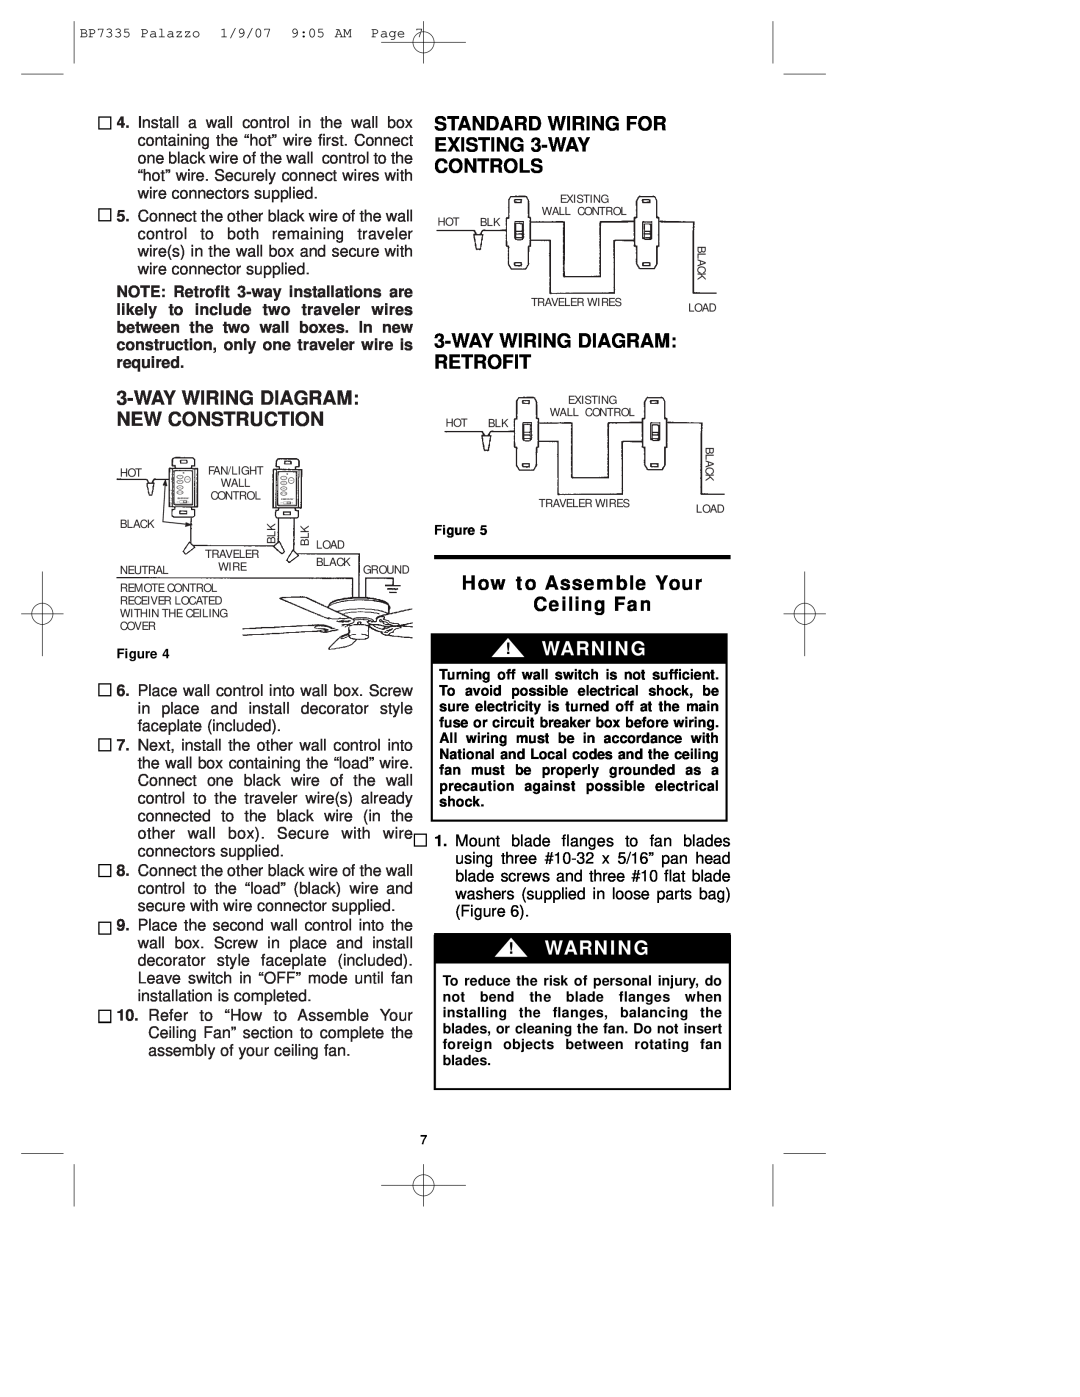 Emerson CF943 STANDARD WIRING FOR EXISTING 3-WAYCONTROLS, Waywiring Diagram Retrofit, WAYWIRlNG DIAGRAM NEW CONSTRUCTION 